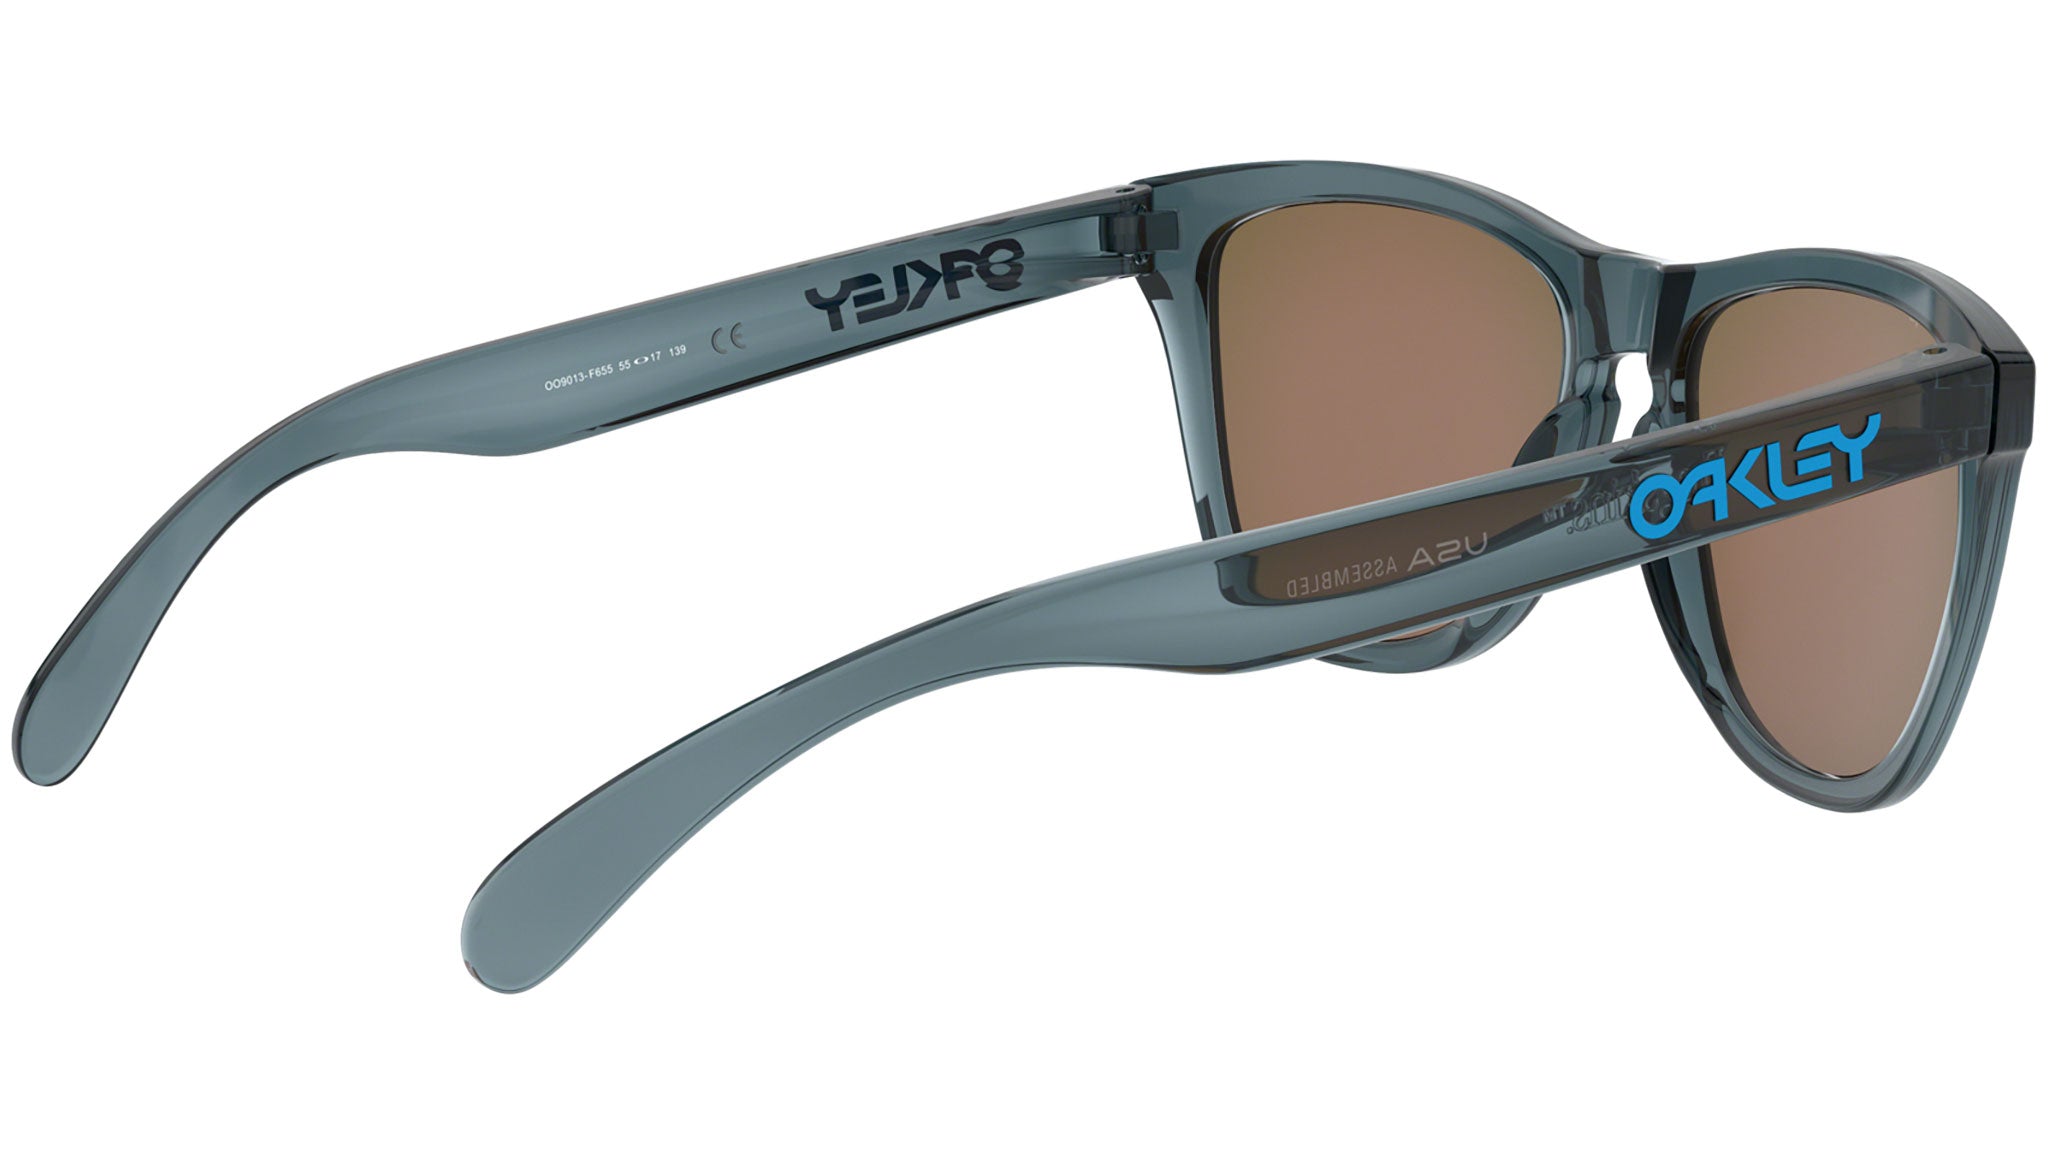 [OO9013-F6] Mens Oakley Frogskins Polarized Sunglasses